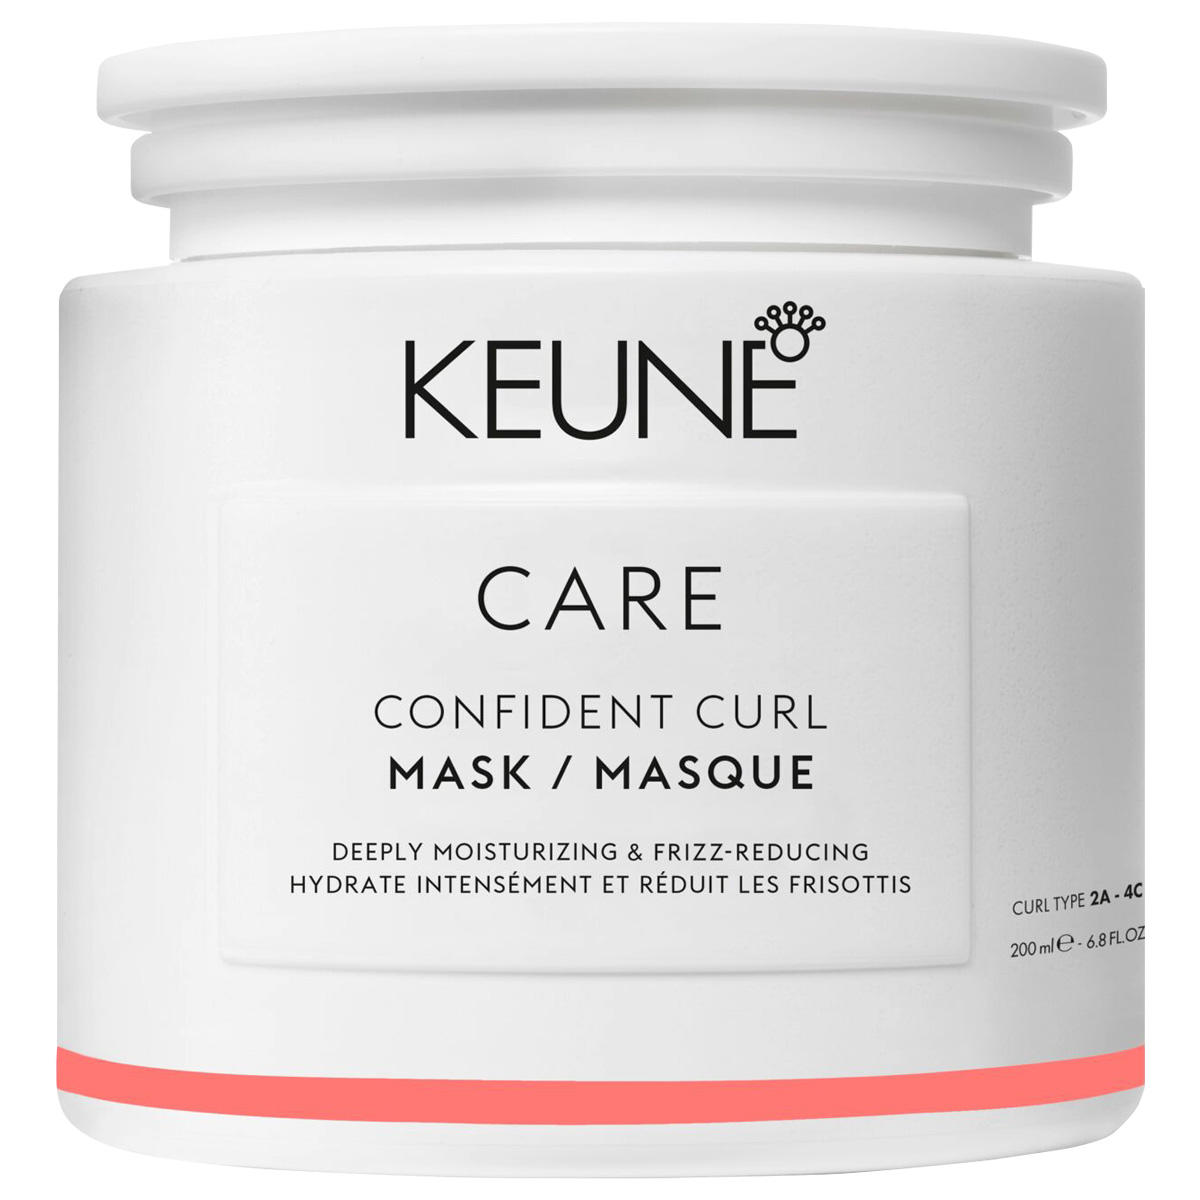 KEUNE CARE Confident Curl Mask 200 ml - 1